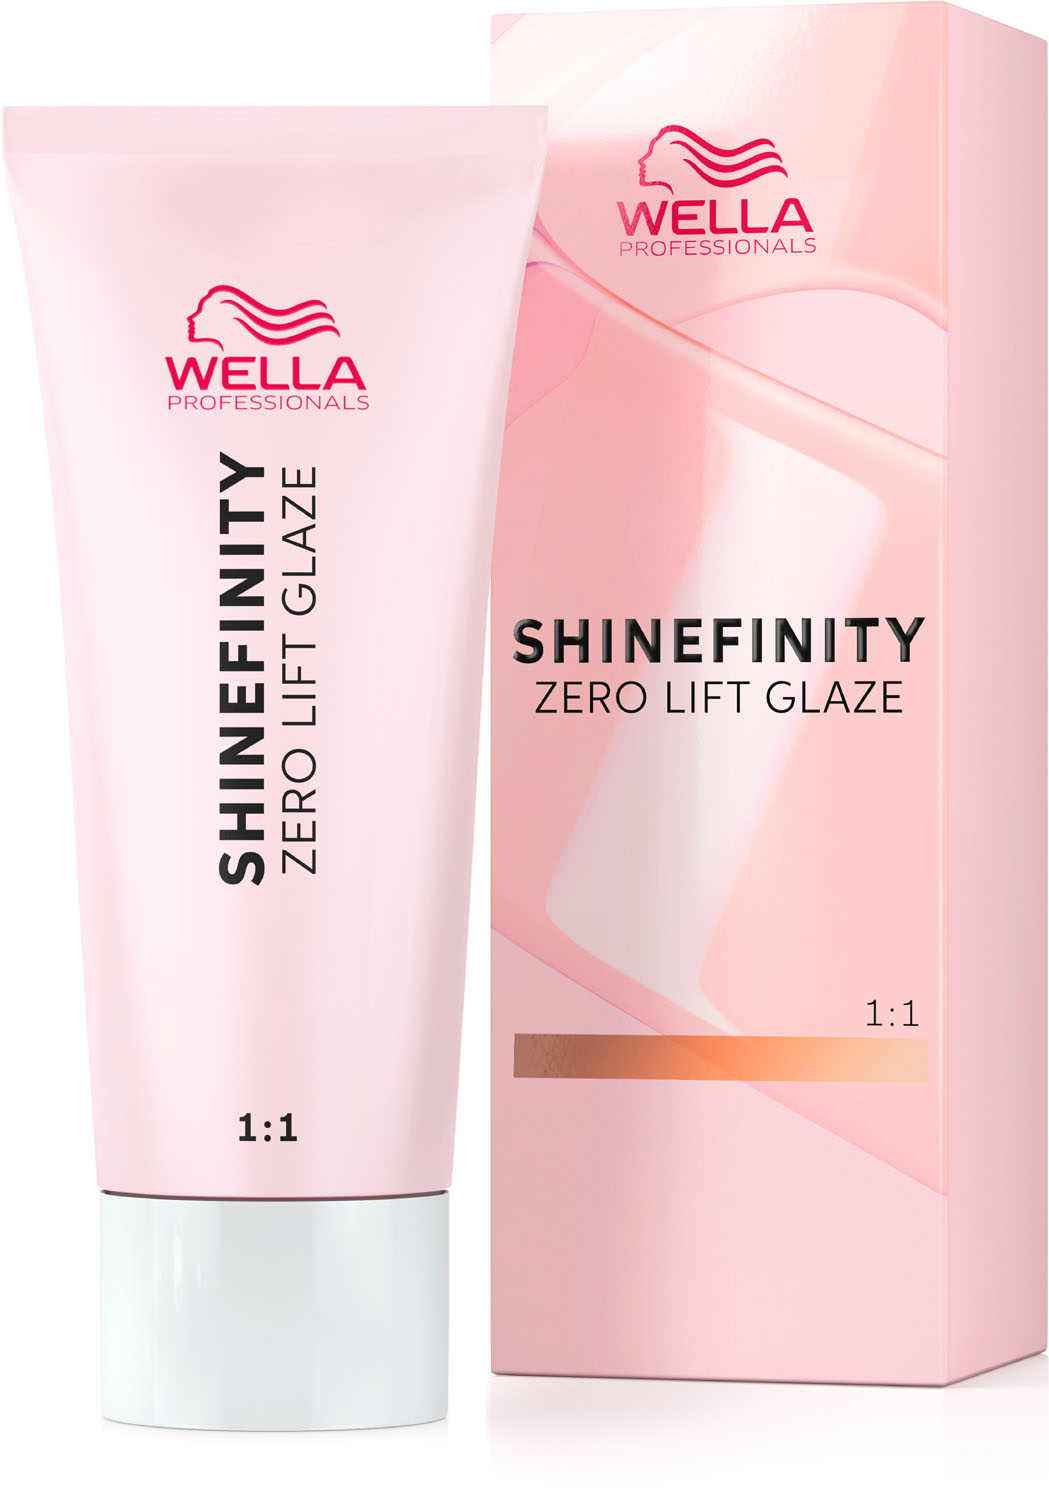  Wella Shinefinity Zero Lift Glazes 09/36 Vanilla Glaze 